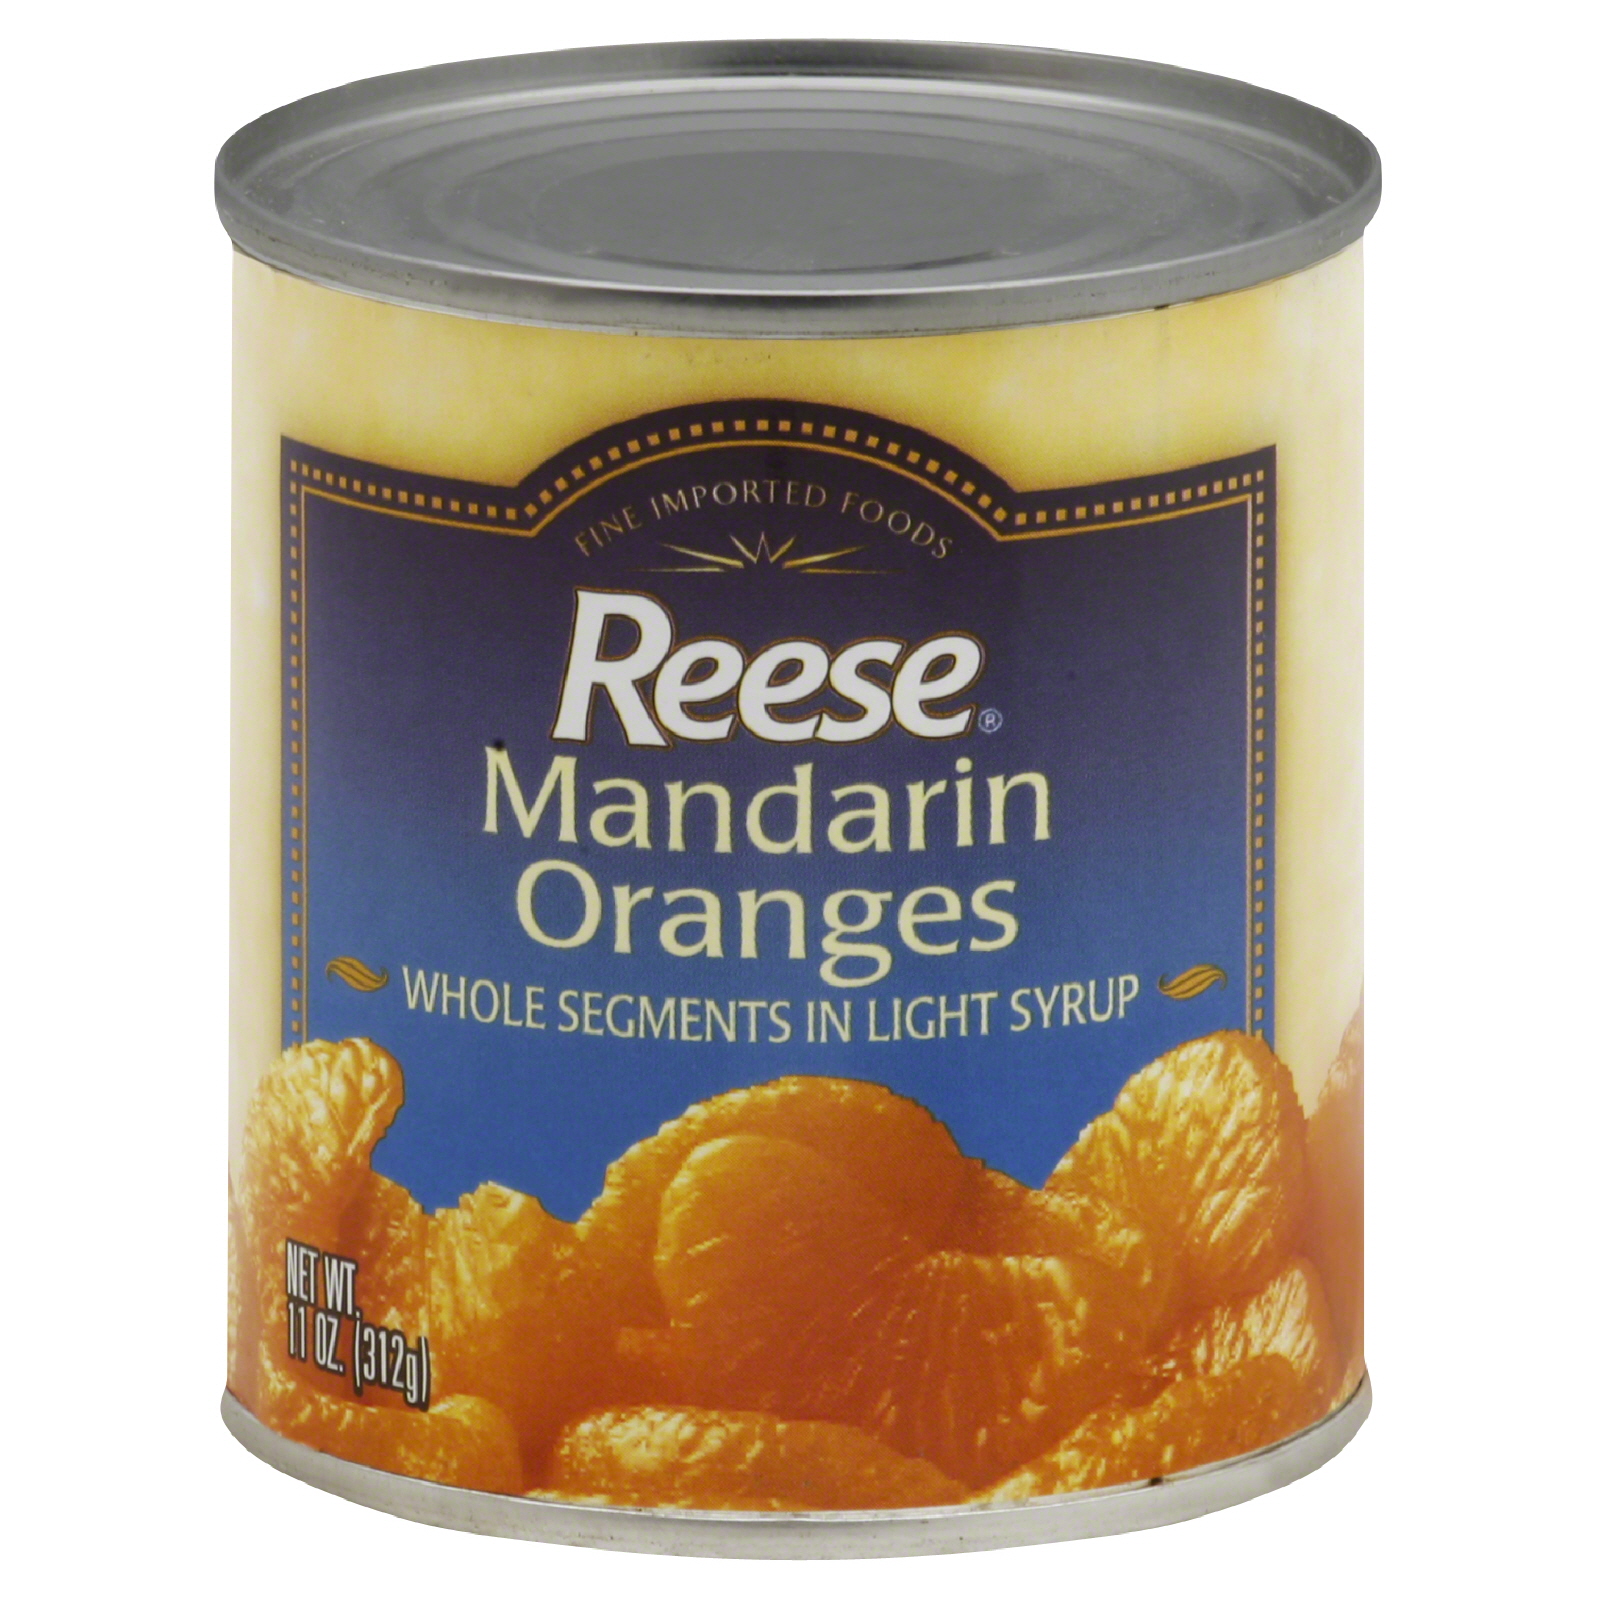 Reese Mandarin Oranges, Whole Segments in Light Syrup, 11 oz (312 g)